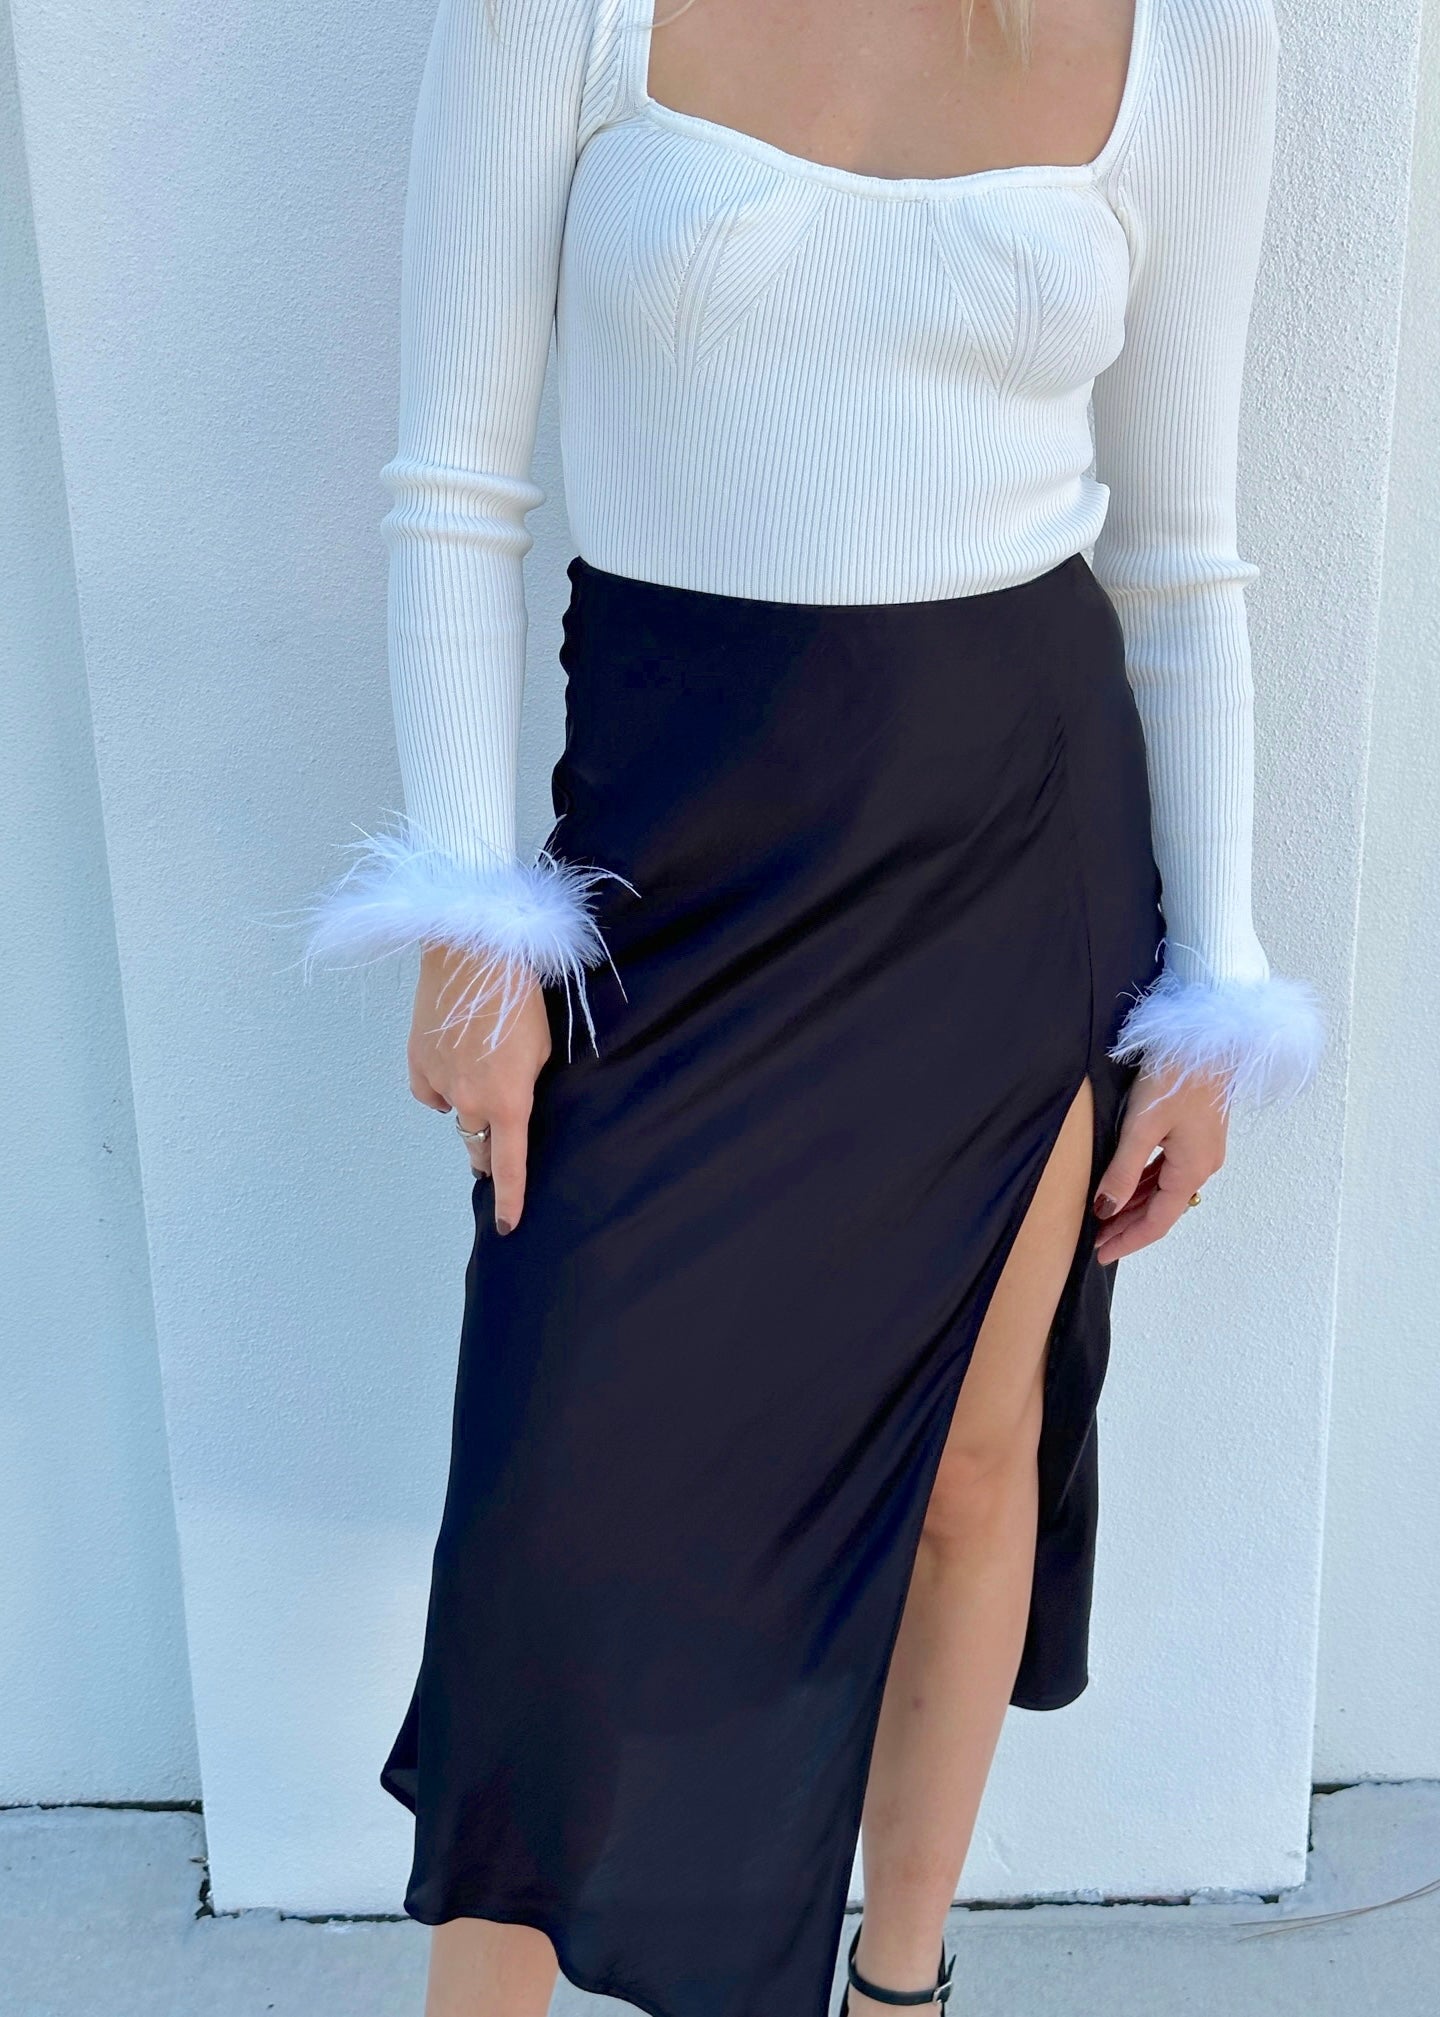 Autumn Night Out: Black Satin Midi Slit Skirt